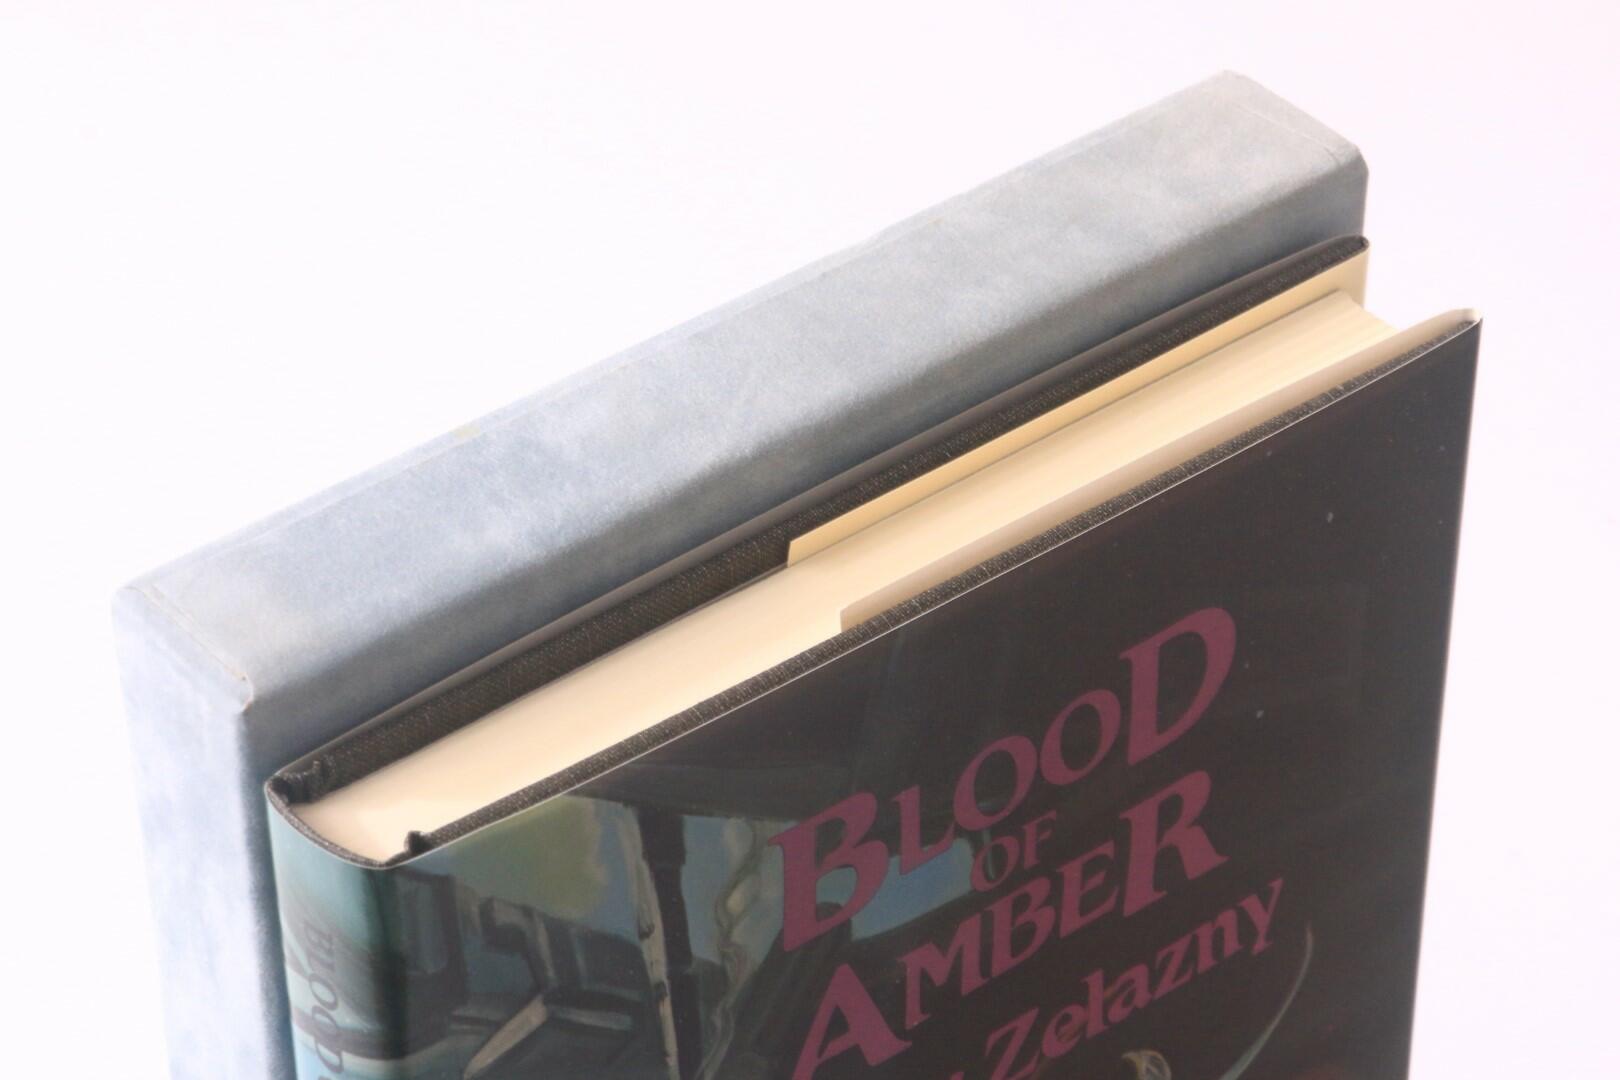 Roger Zelazny - Blood of Amber - Underwood Miller, 1986, Signed Limited Edition.